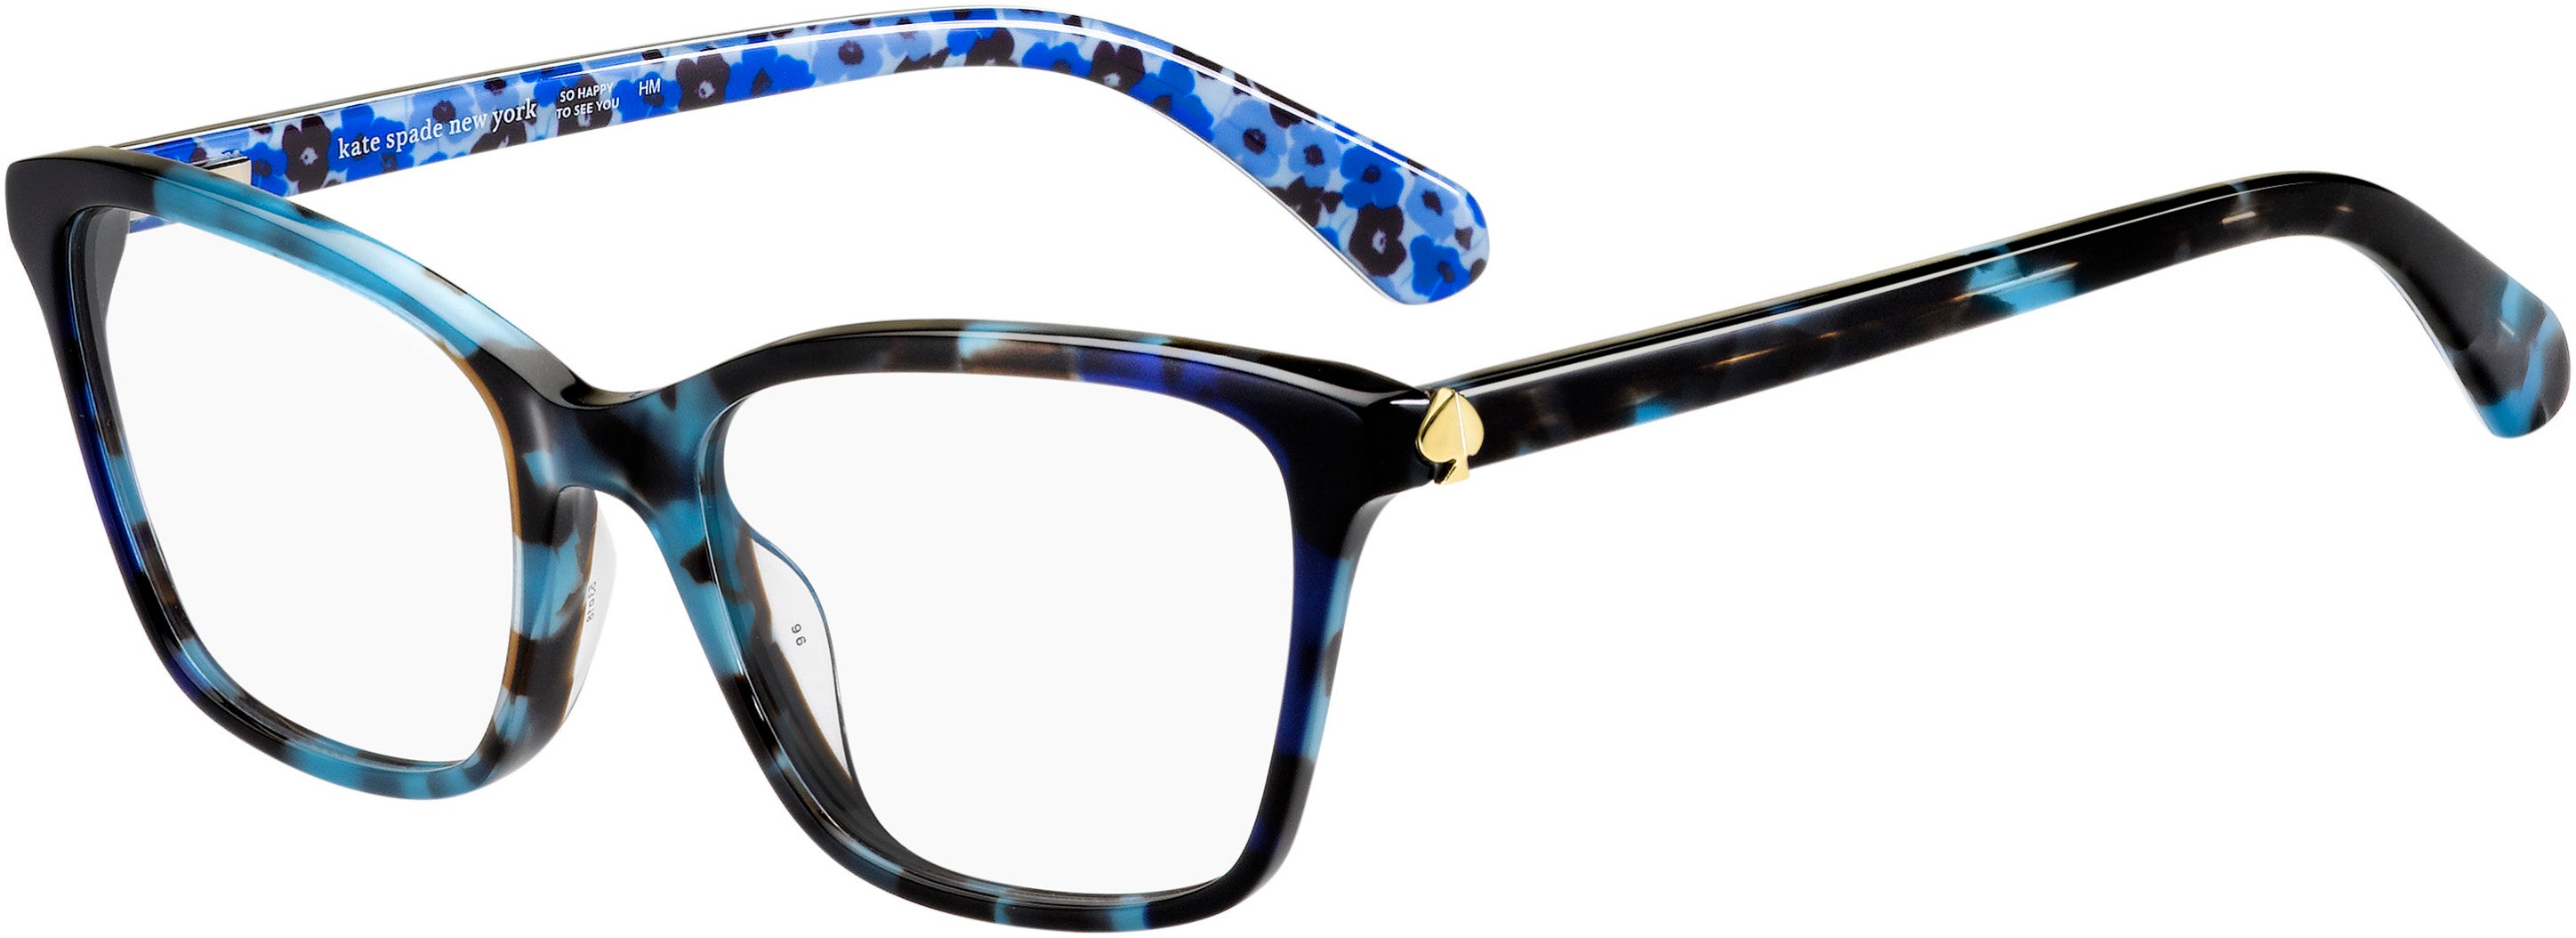 Kate Spade Cailye Rectangular Eyeglasses 0XP8-0XP8  Bl Havana Blue (00 Demo Lens)